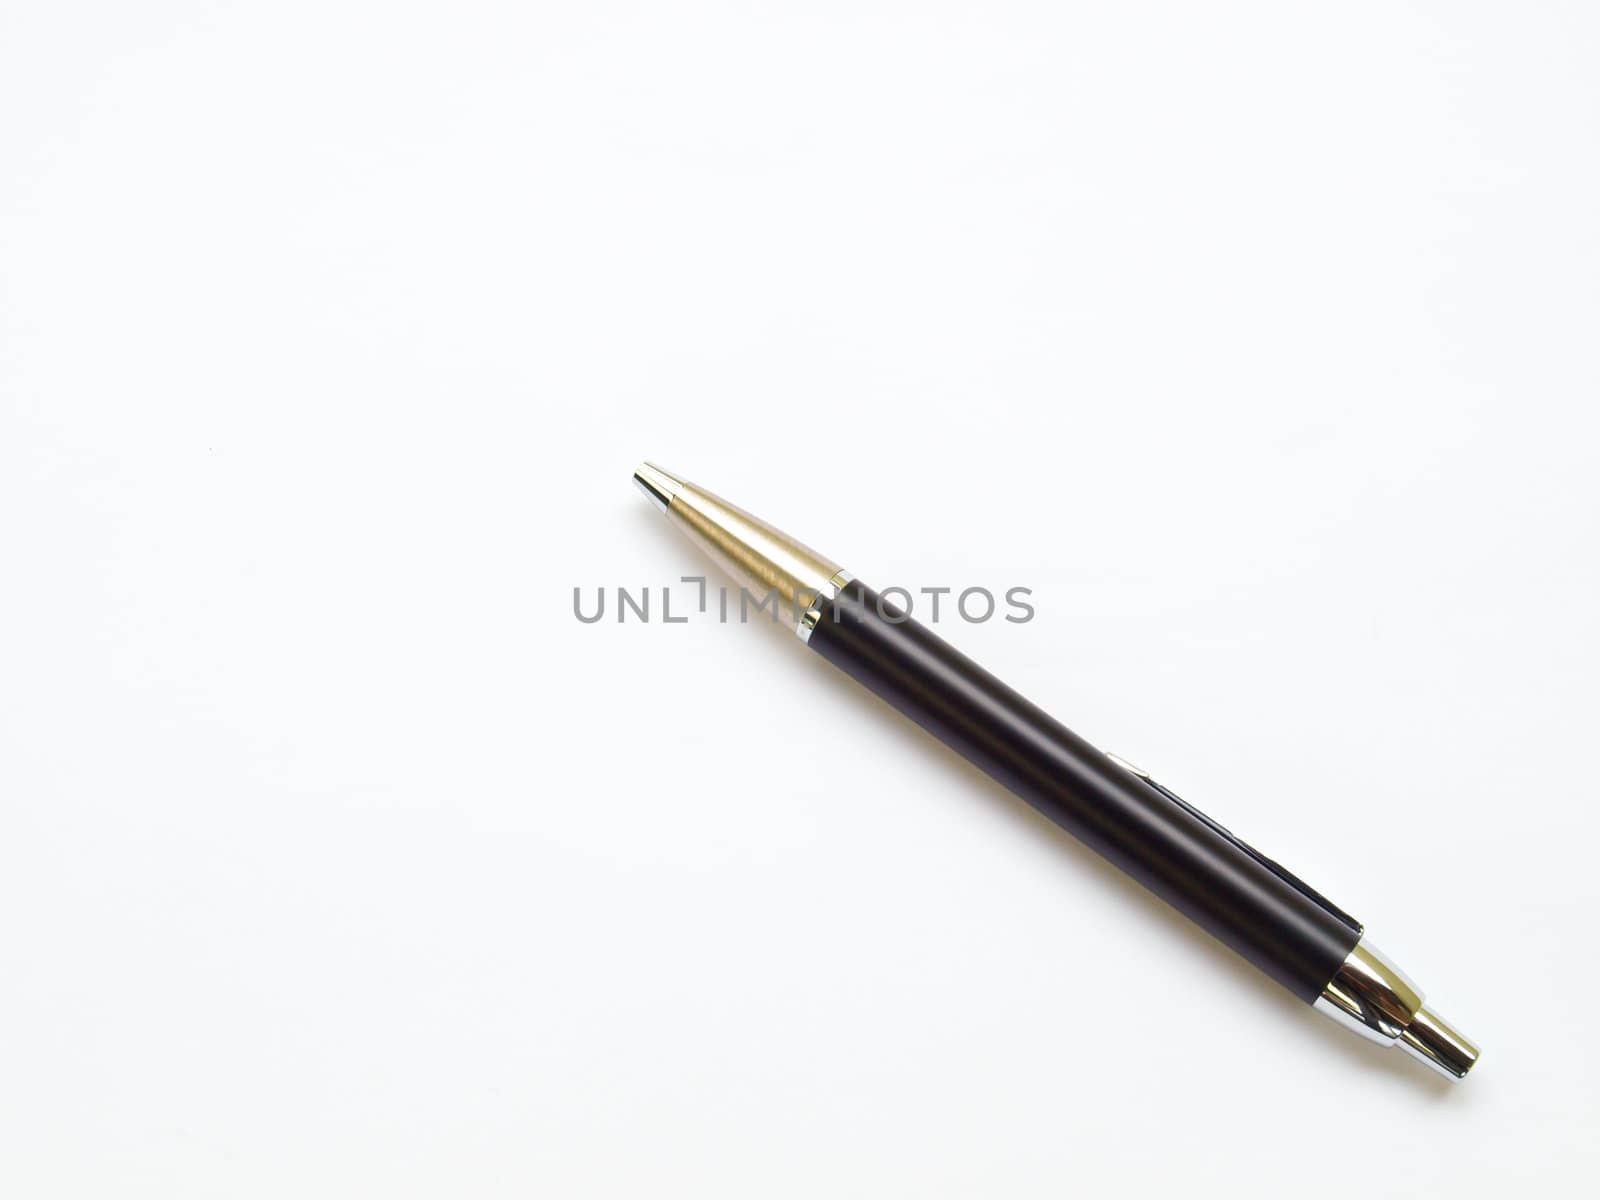 Black ball pen isolated on white background by gururugu